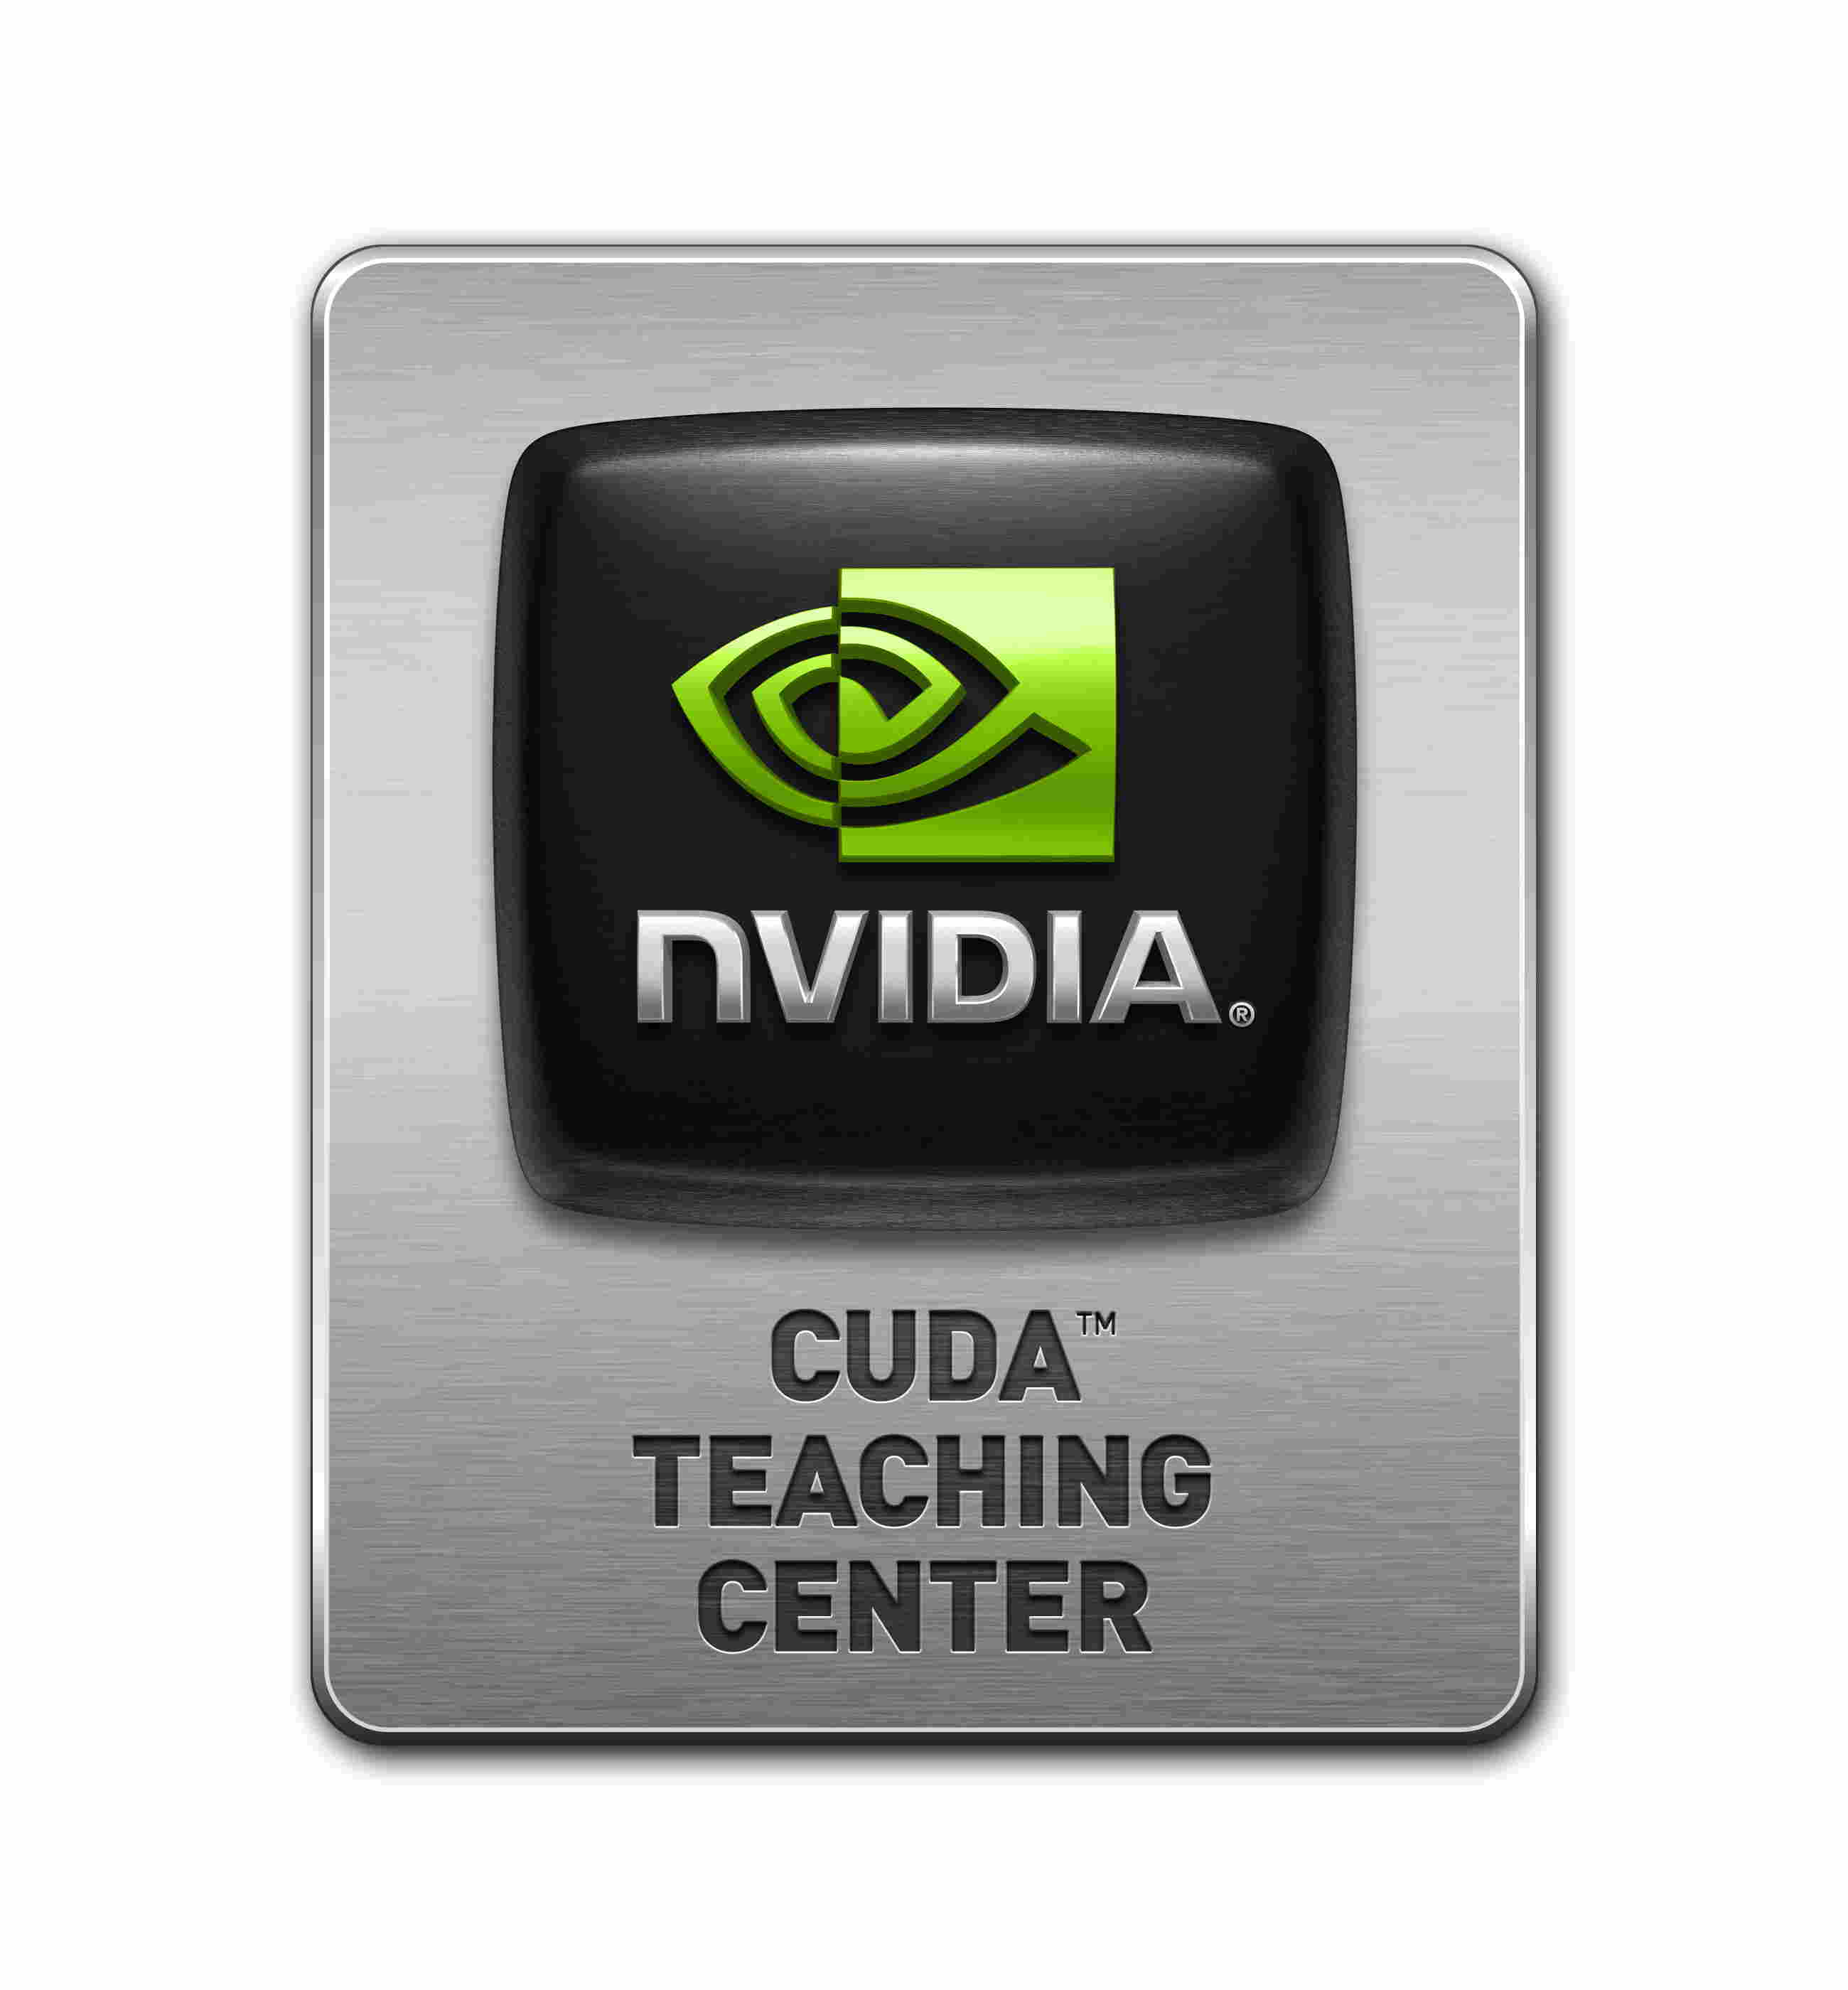 CUDA teaching center